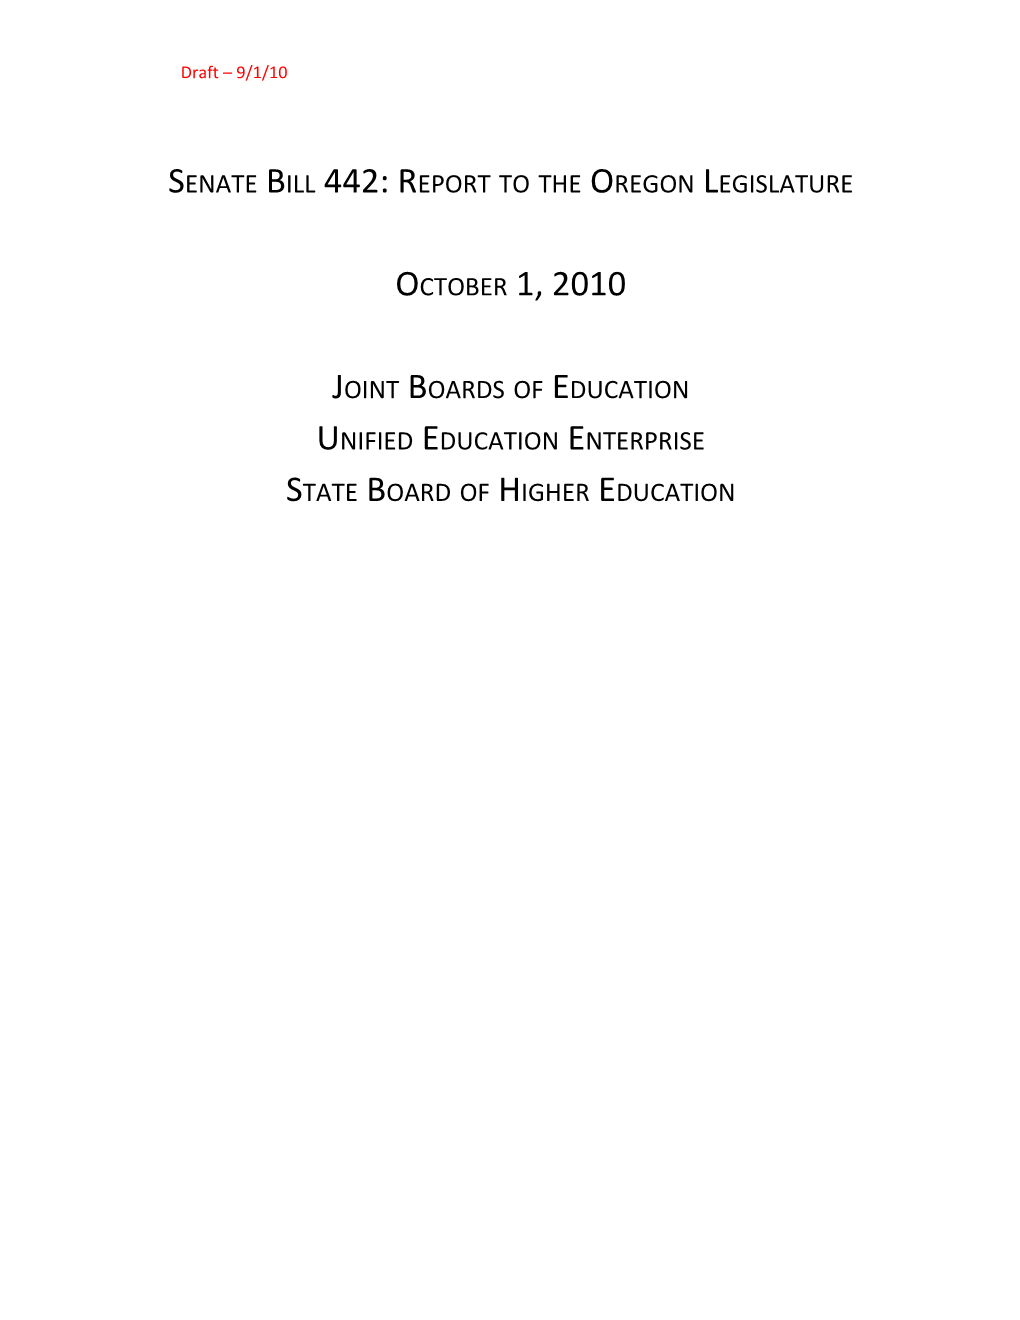 Senate Bill 442: Report to the Oregon Legislature